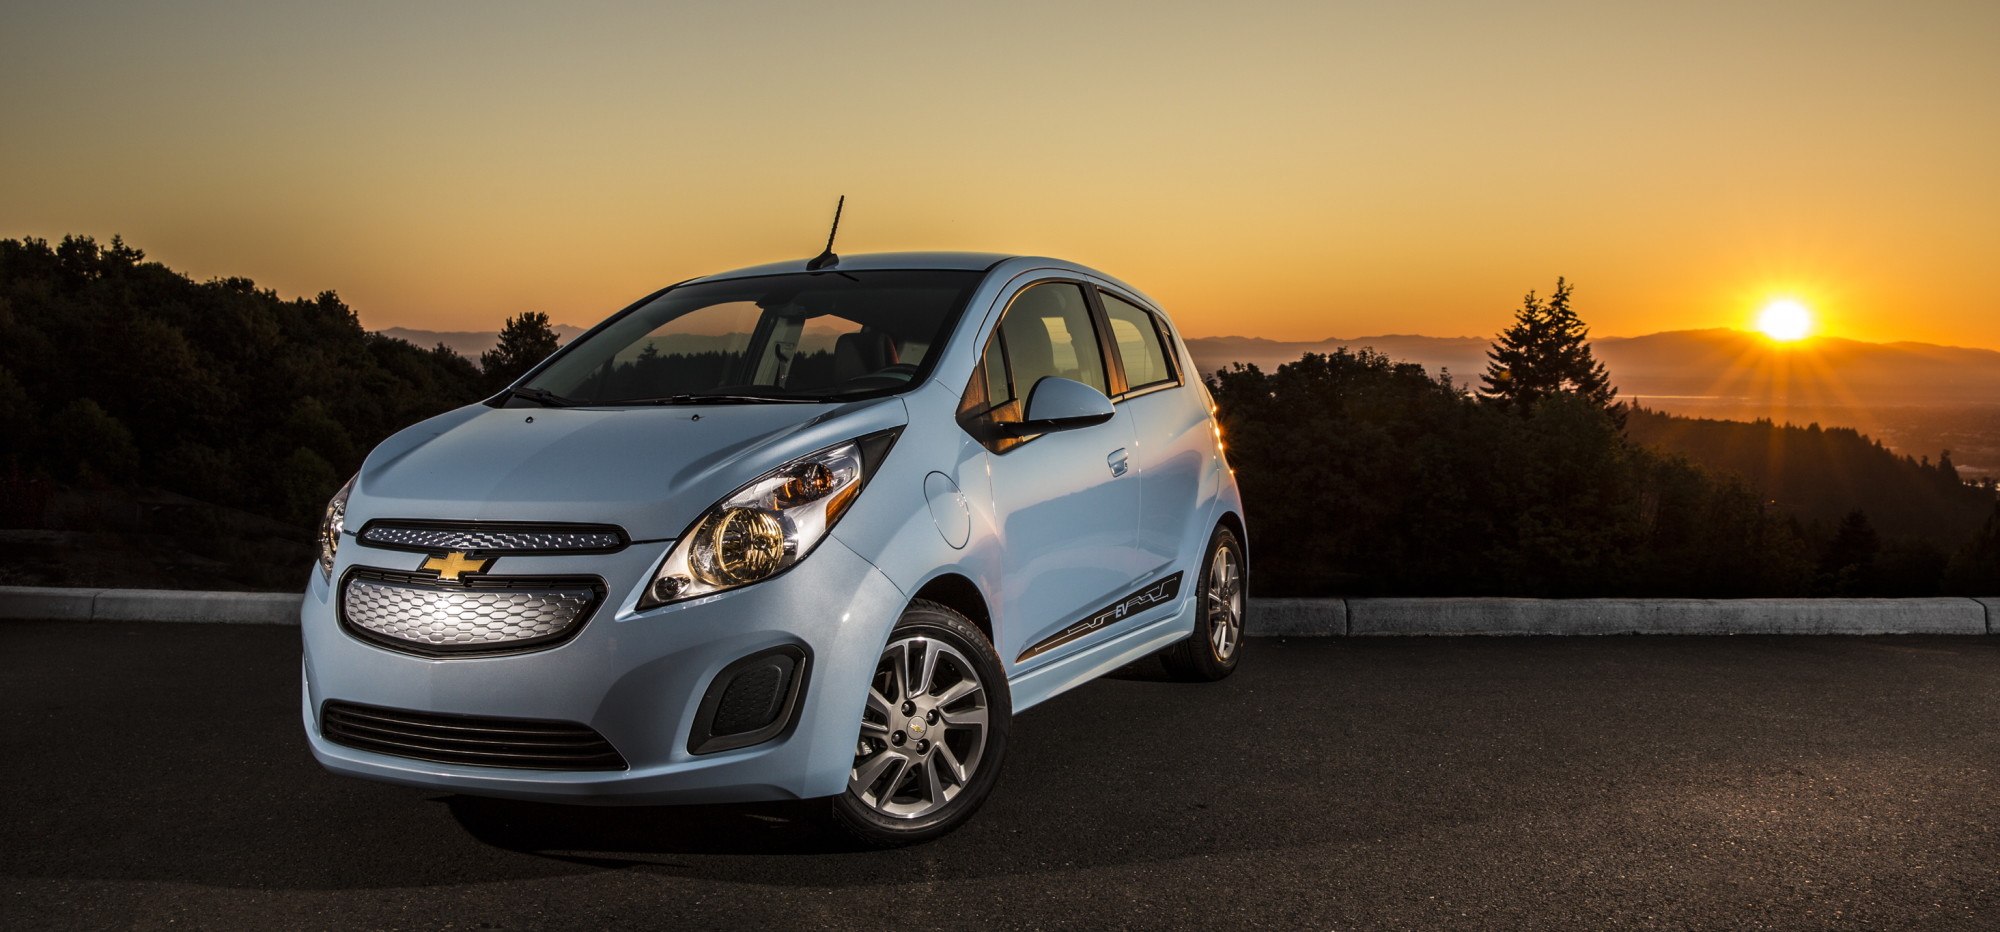 Top 10 Best Fuel Economy Cars for 2014 | Clean Fleet Report